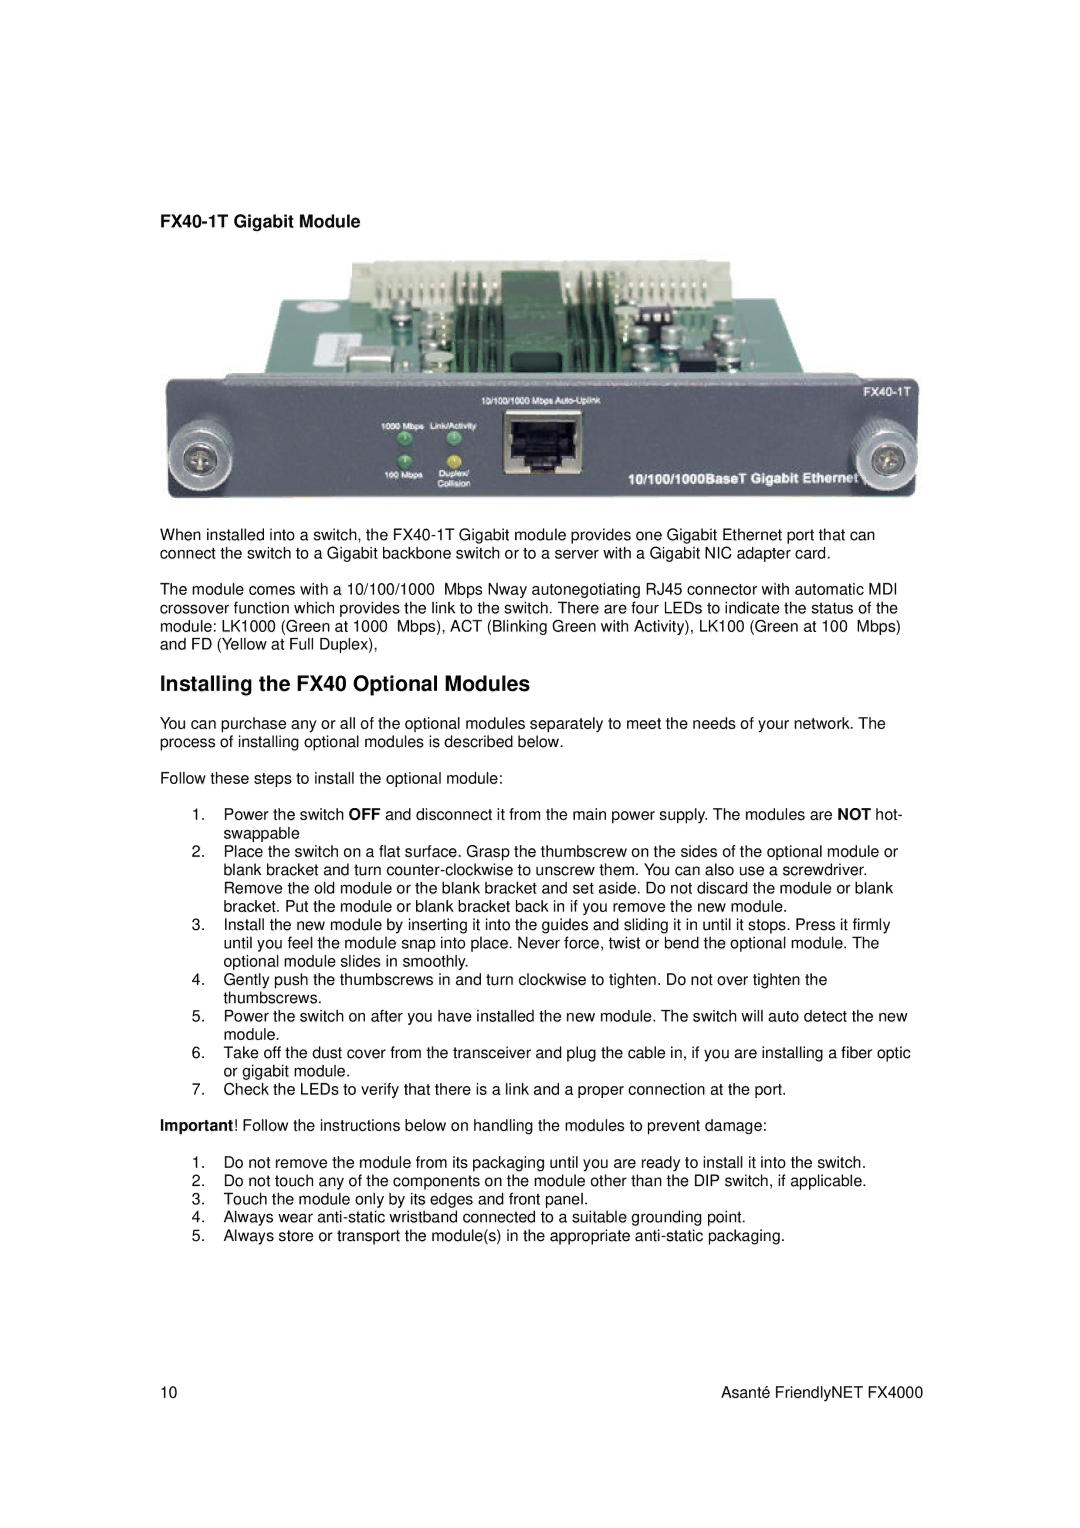 Asante Technologies FX4000 user manual Installing the FX40 Optional Modules, FX40-1T Gigabit Module 